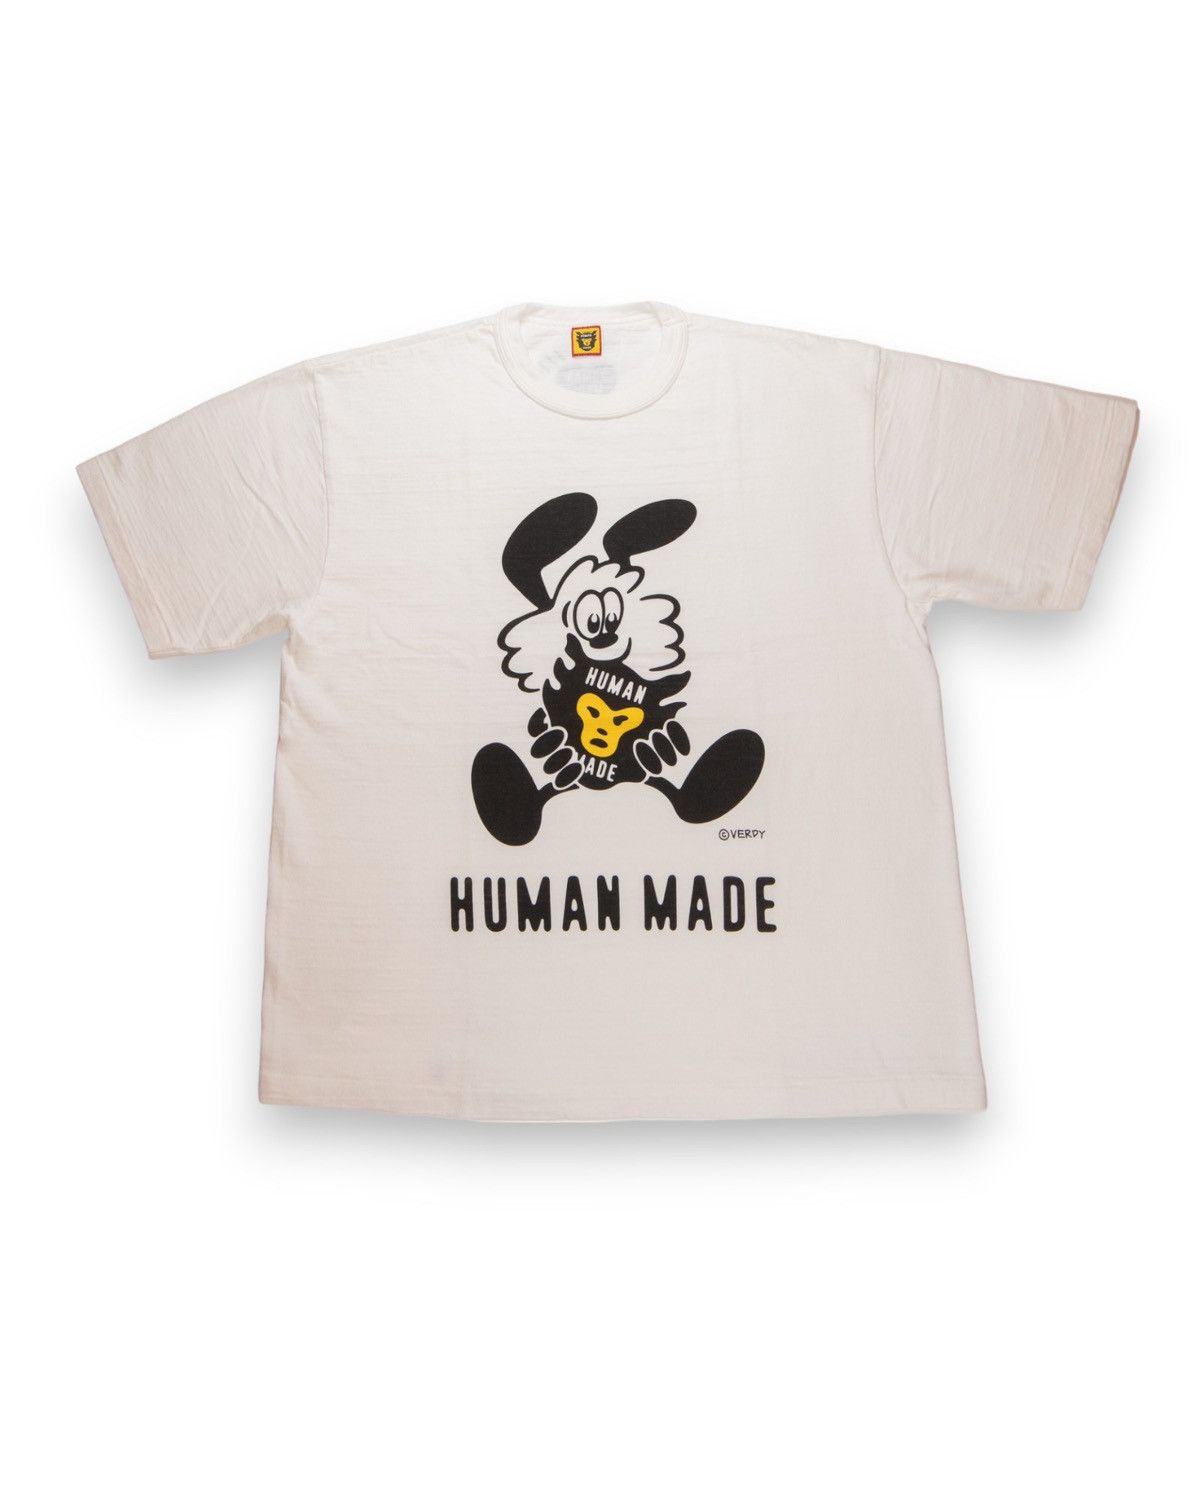 Human Made Human Made X Verdy Vick Tee Shirt | Grailed